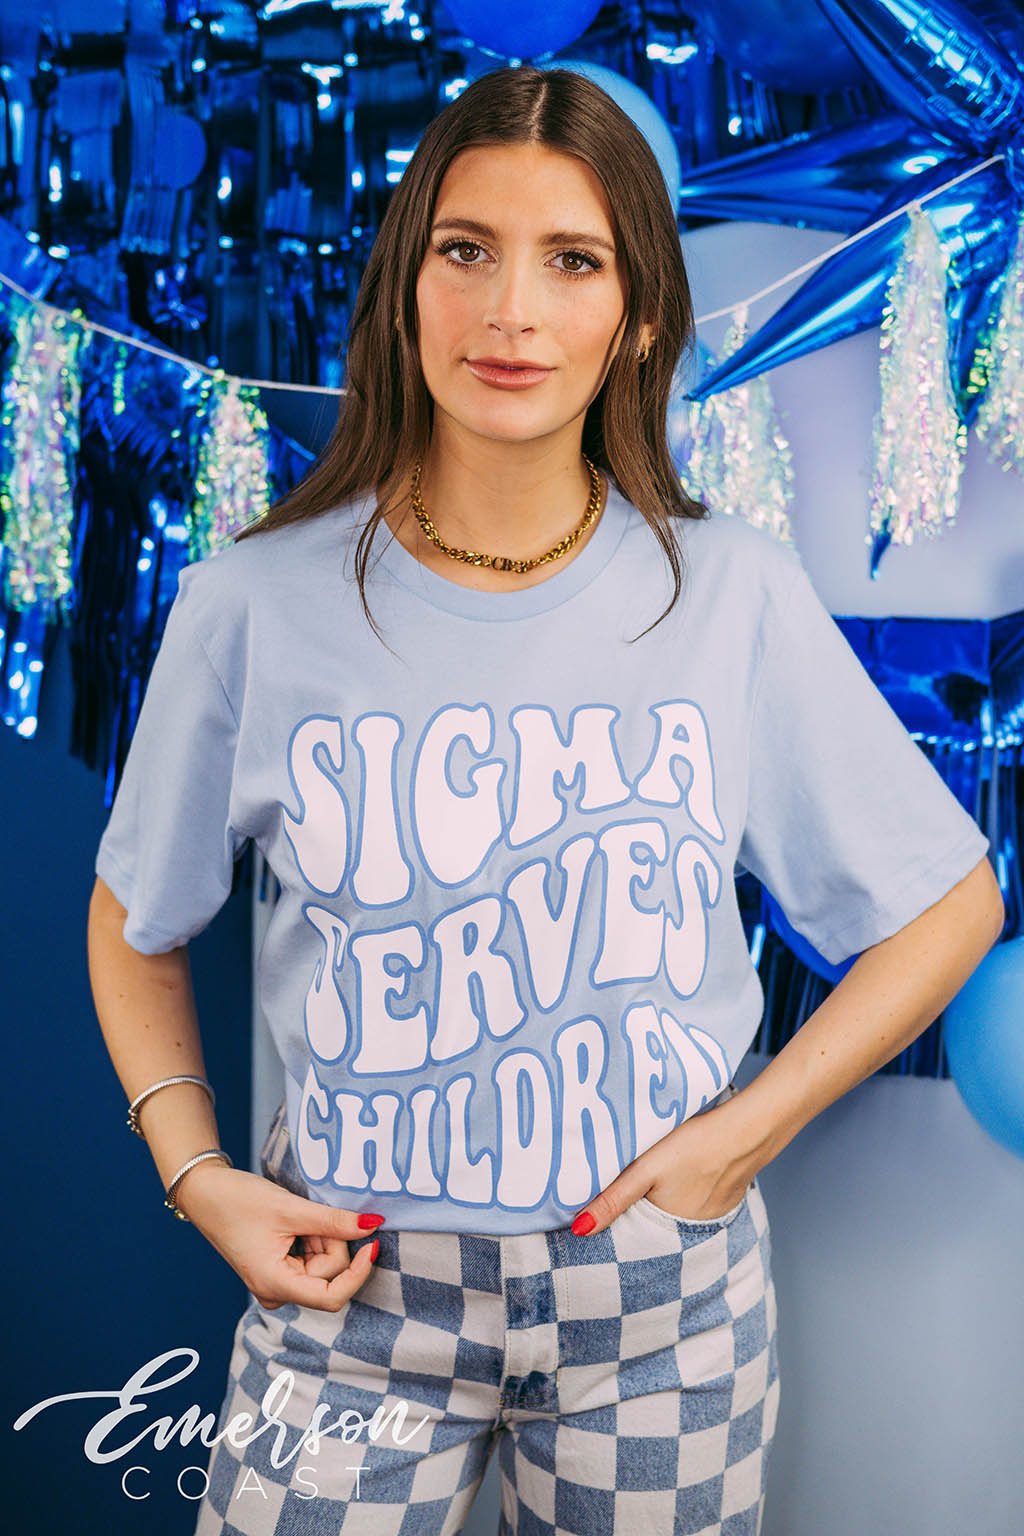 Tri Sigma Philanthropy Sigma Serves Children Tee